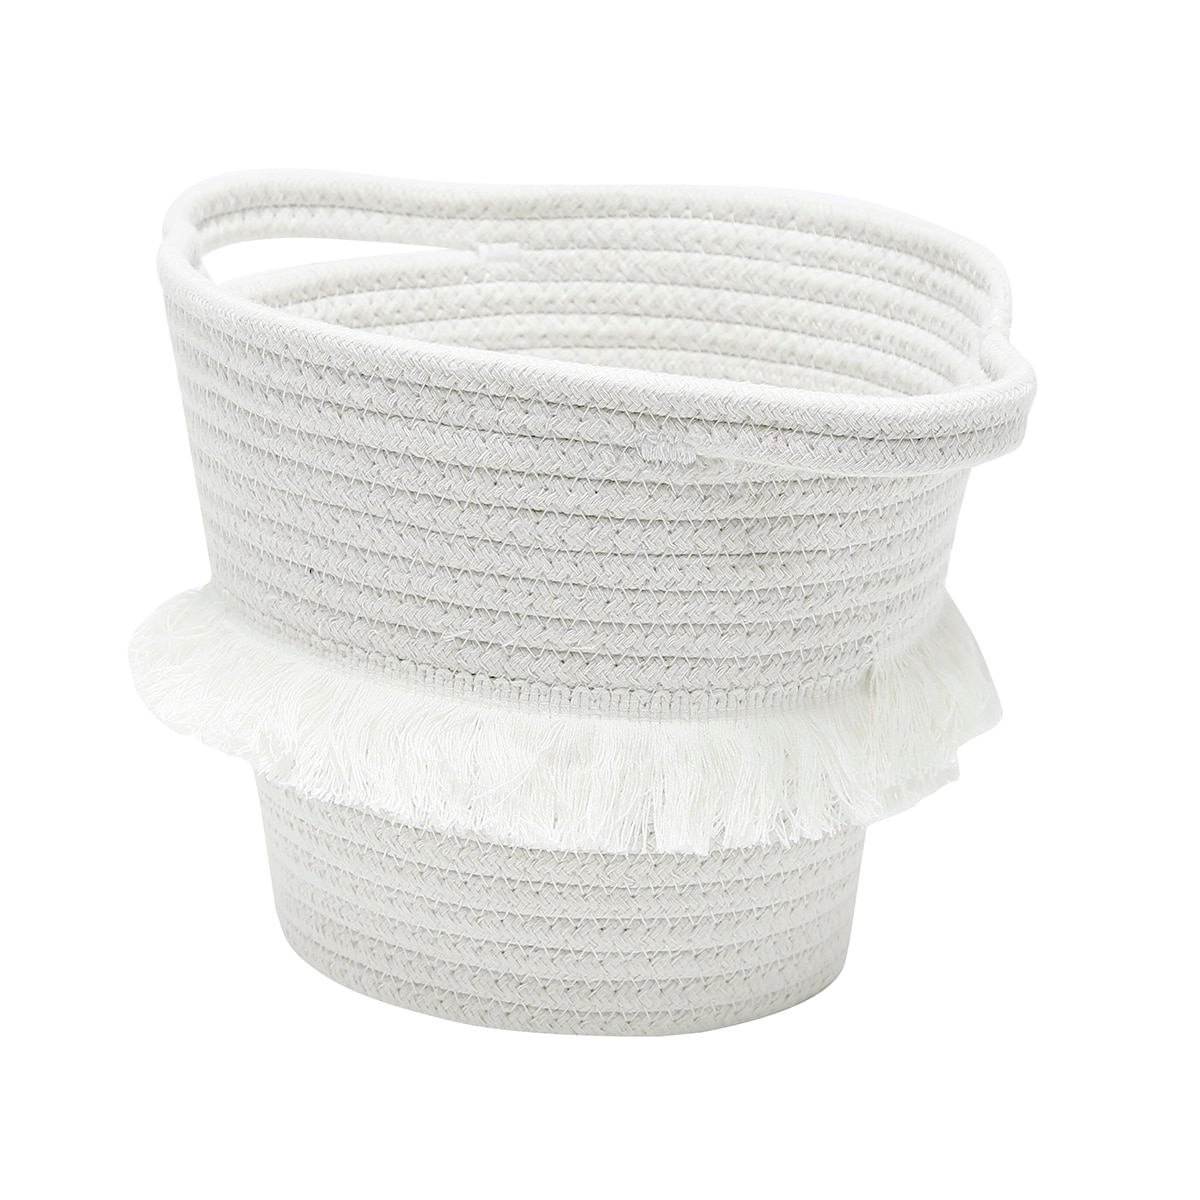 Origin 21 Coiled rope bin 12-in W x 10-in H x 12-in D White